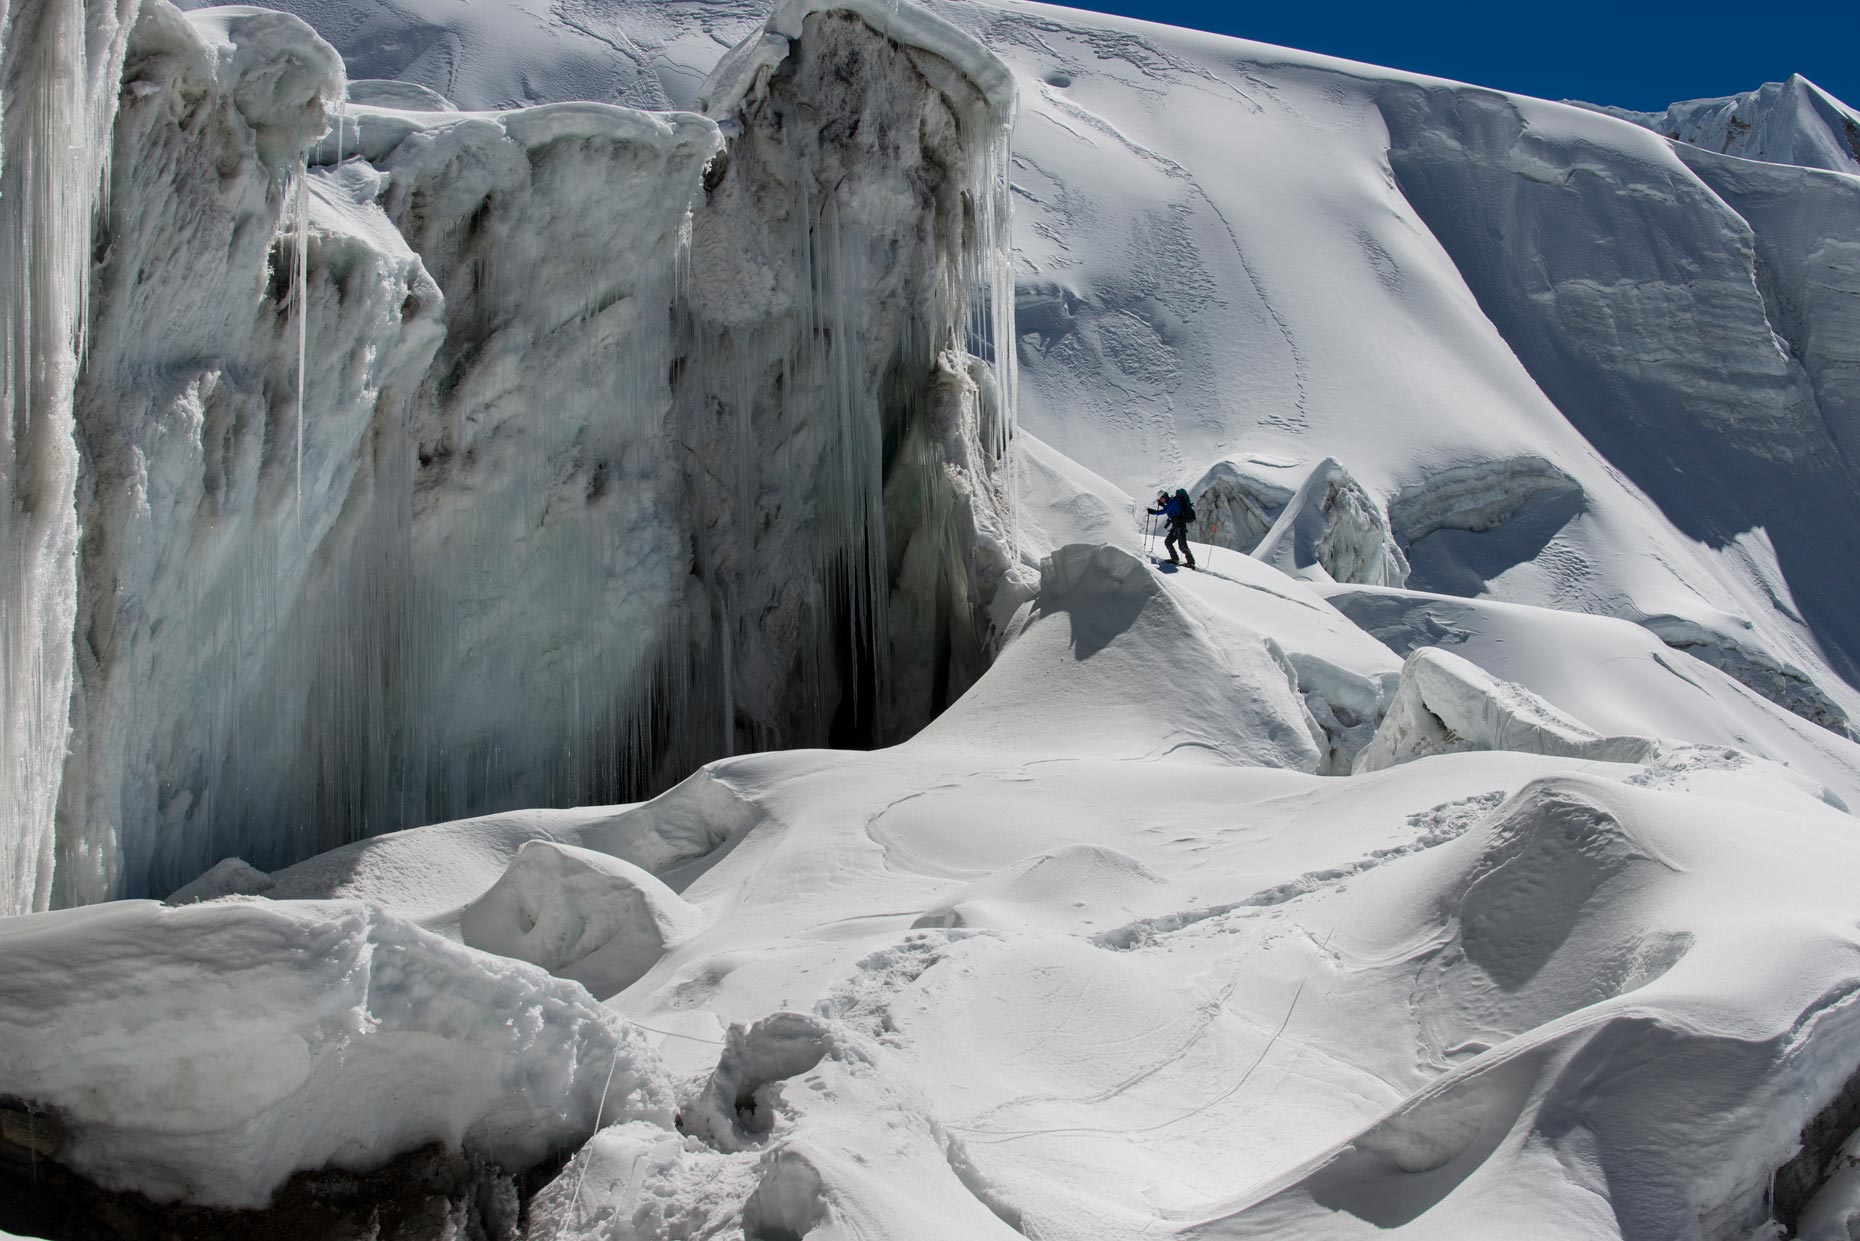 Climbing through Ice seracs | Himalayas Mountain | Editorial Photography | Stefen Chow